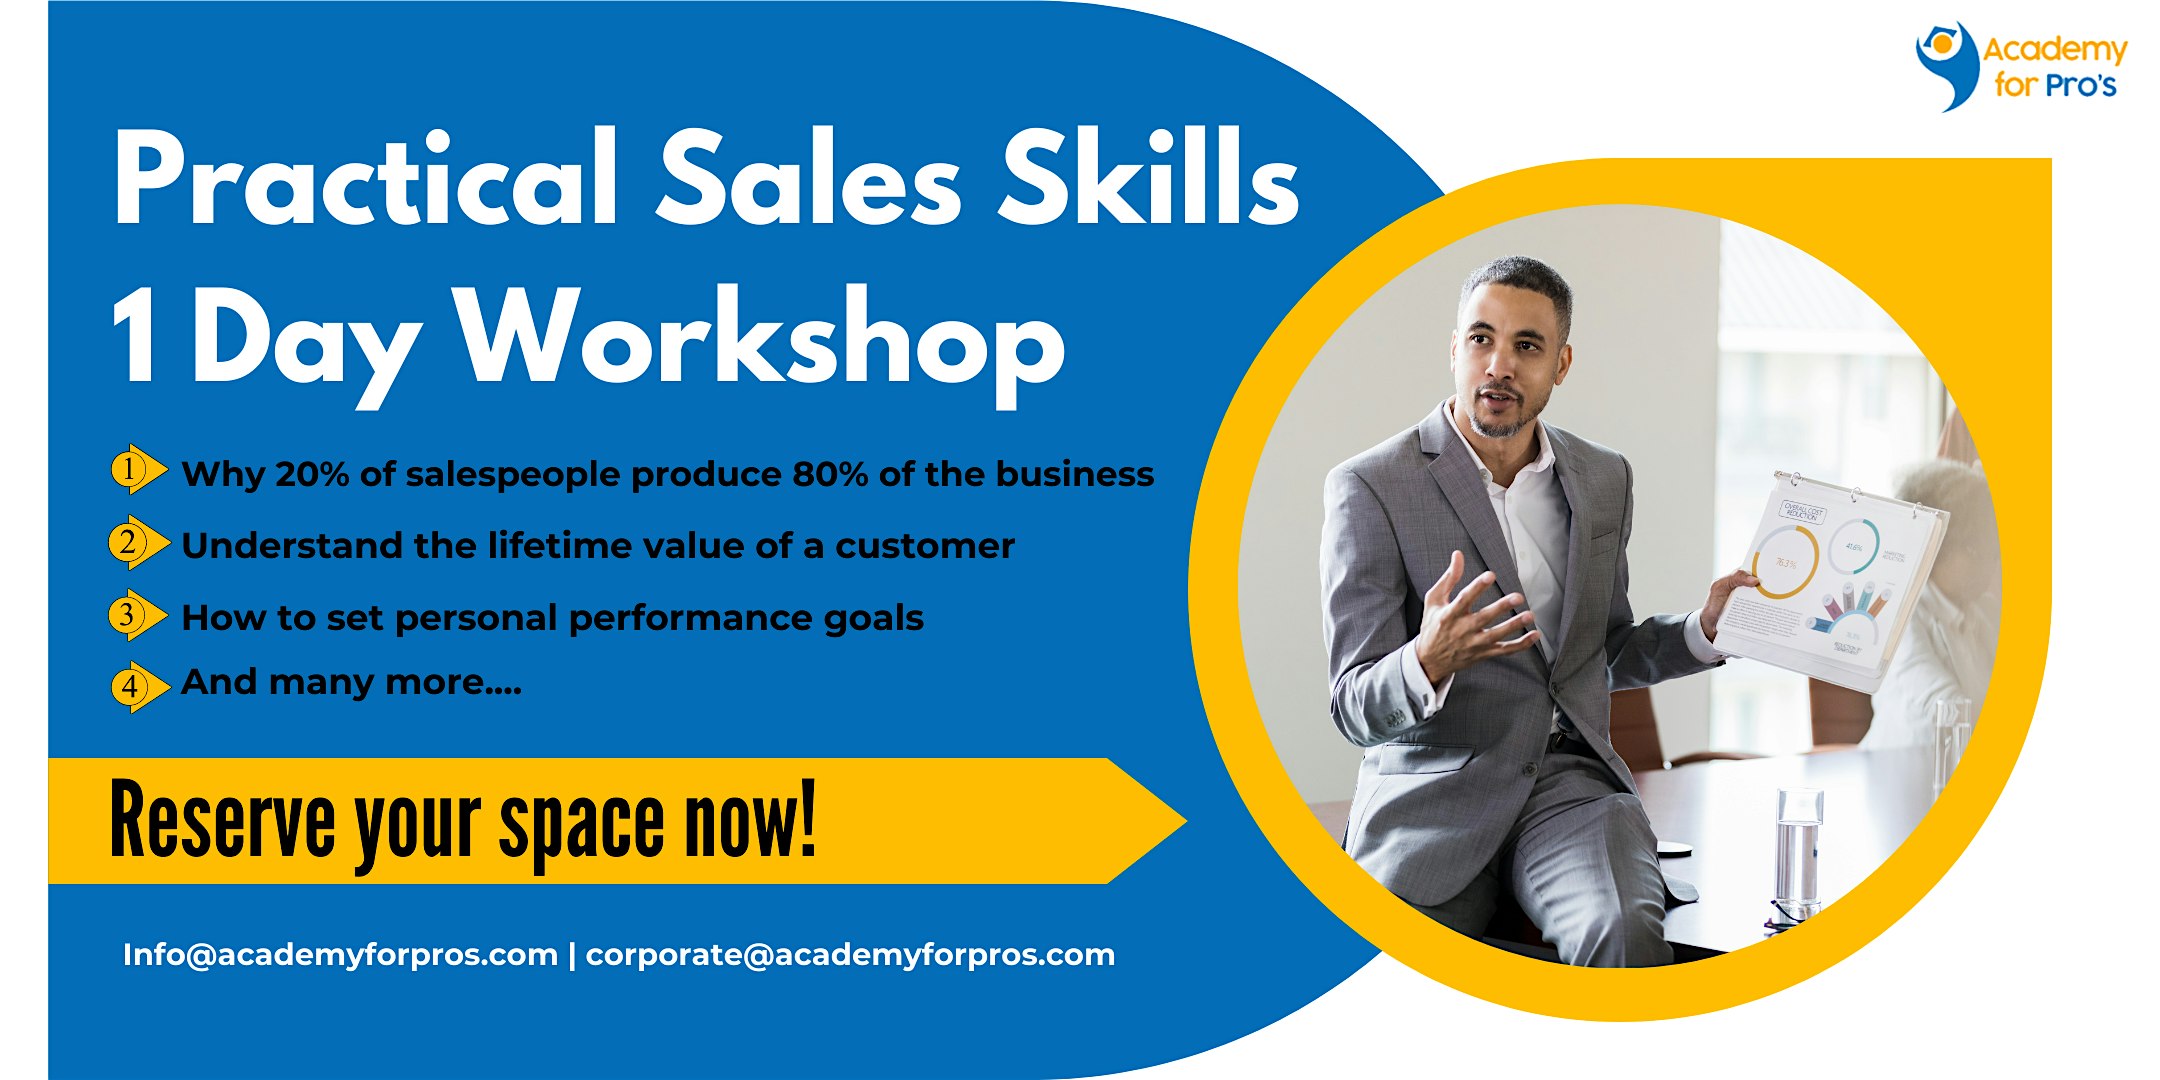 Practical Sales Skills 1-Day Workshop in Huntington Beach, CA